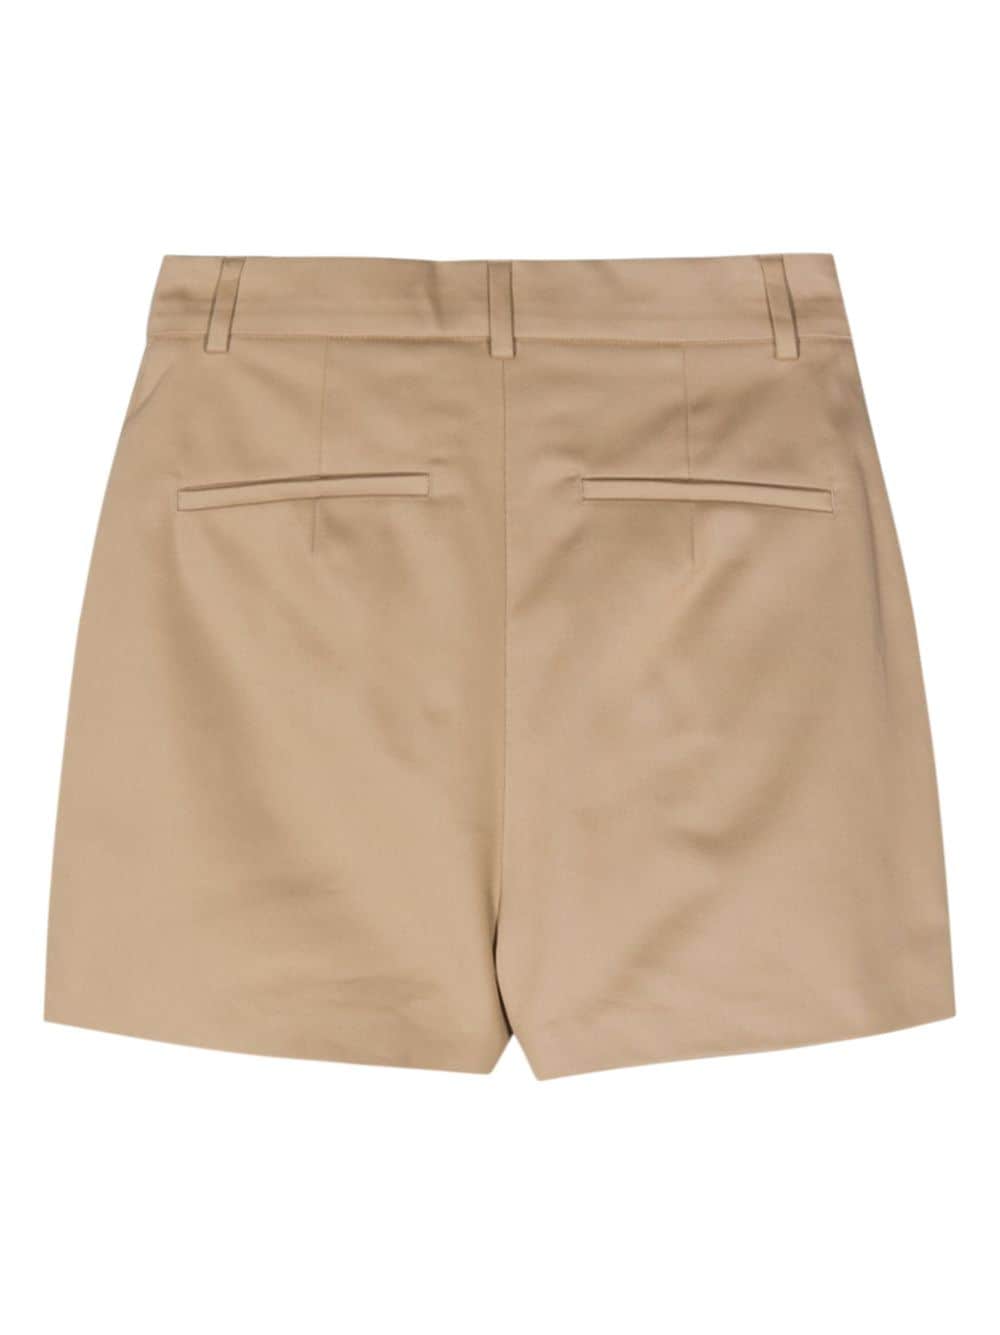 Sportmax Unicomm twill tailored shorts - Beige